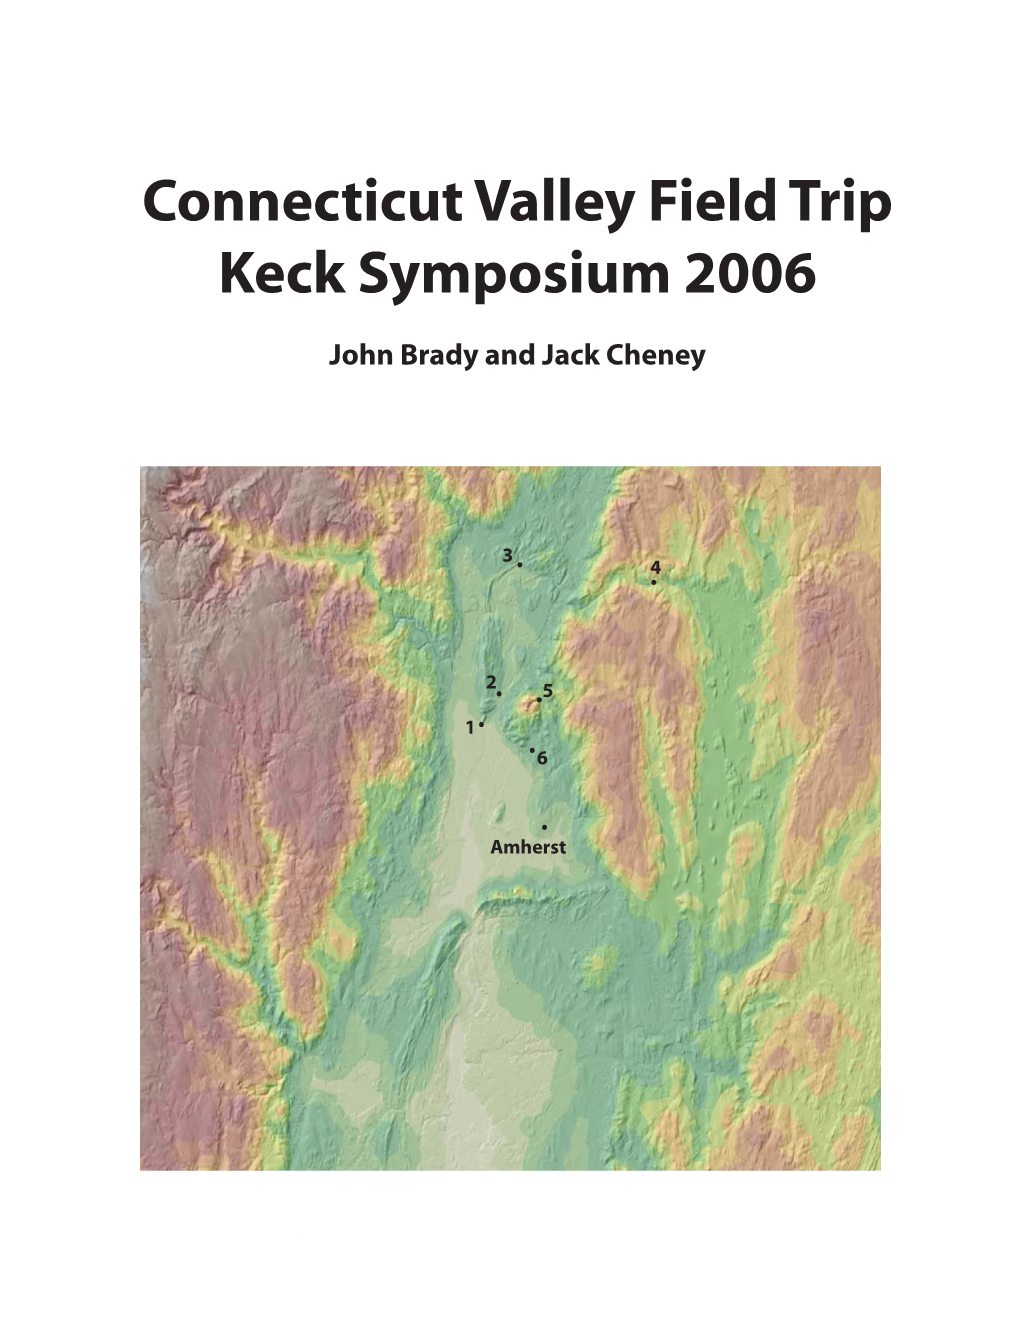 Connecticut Valley Field Trip Keck Symposium 2006